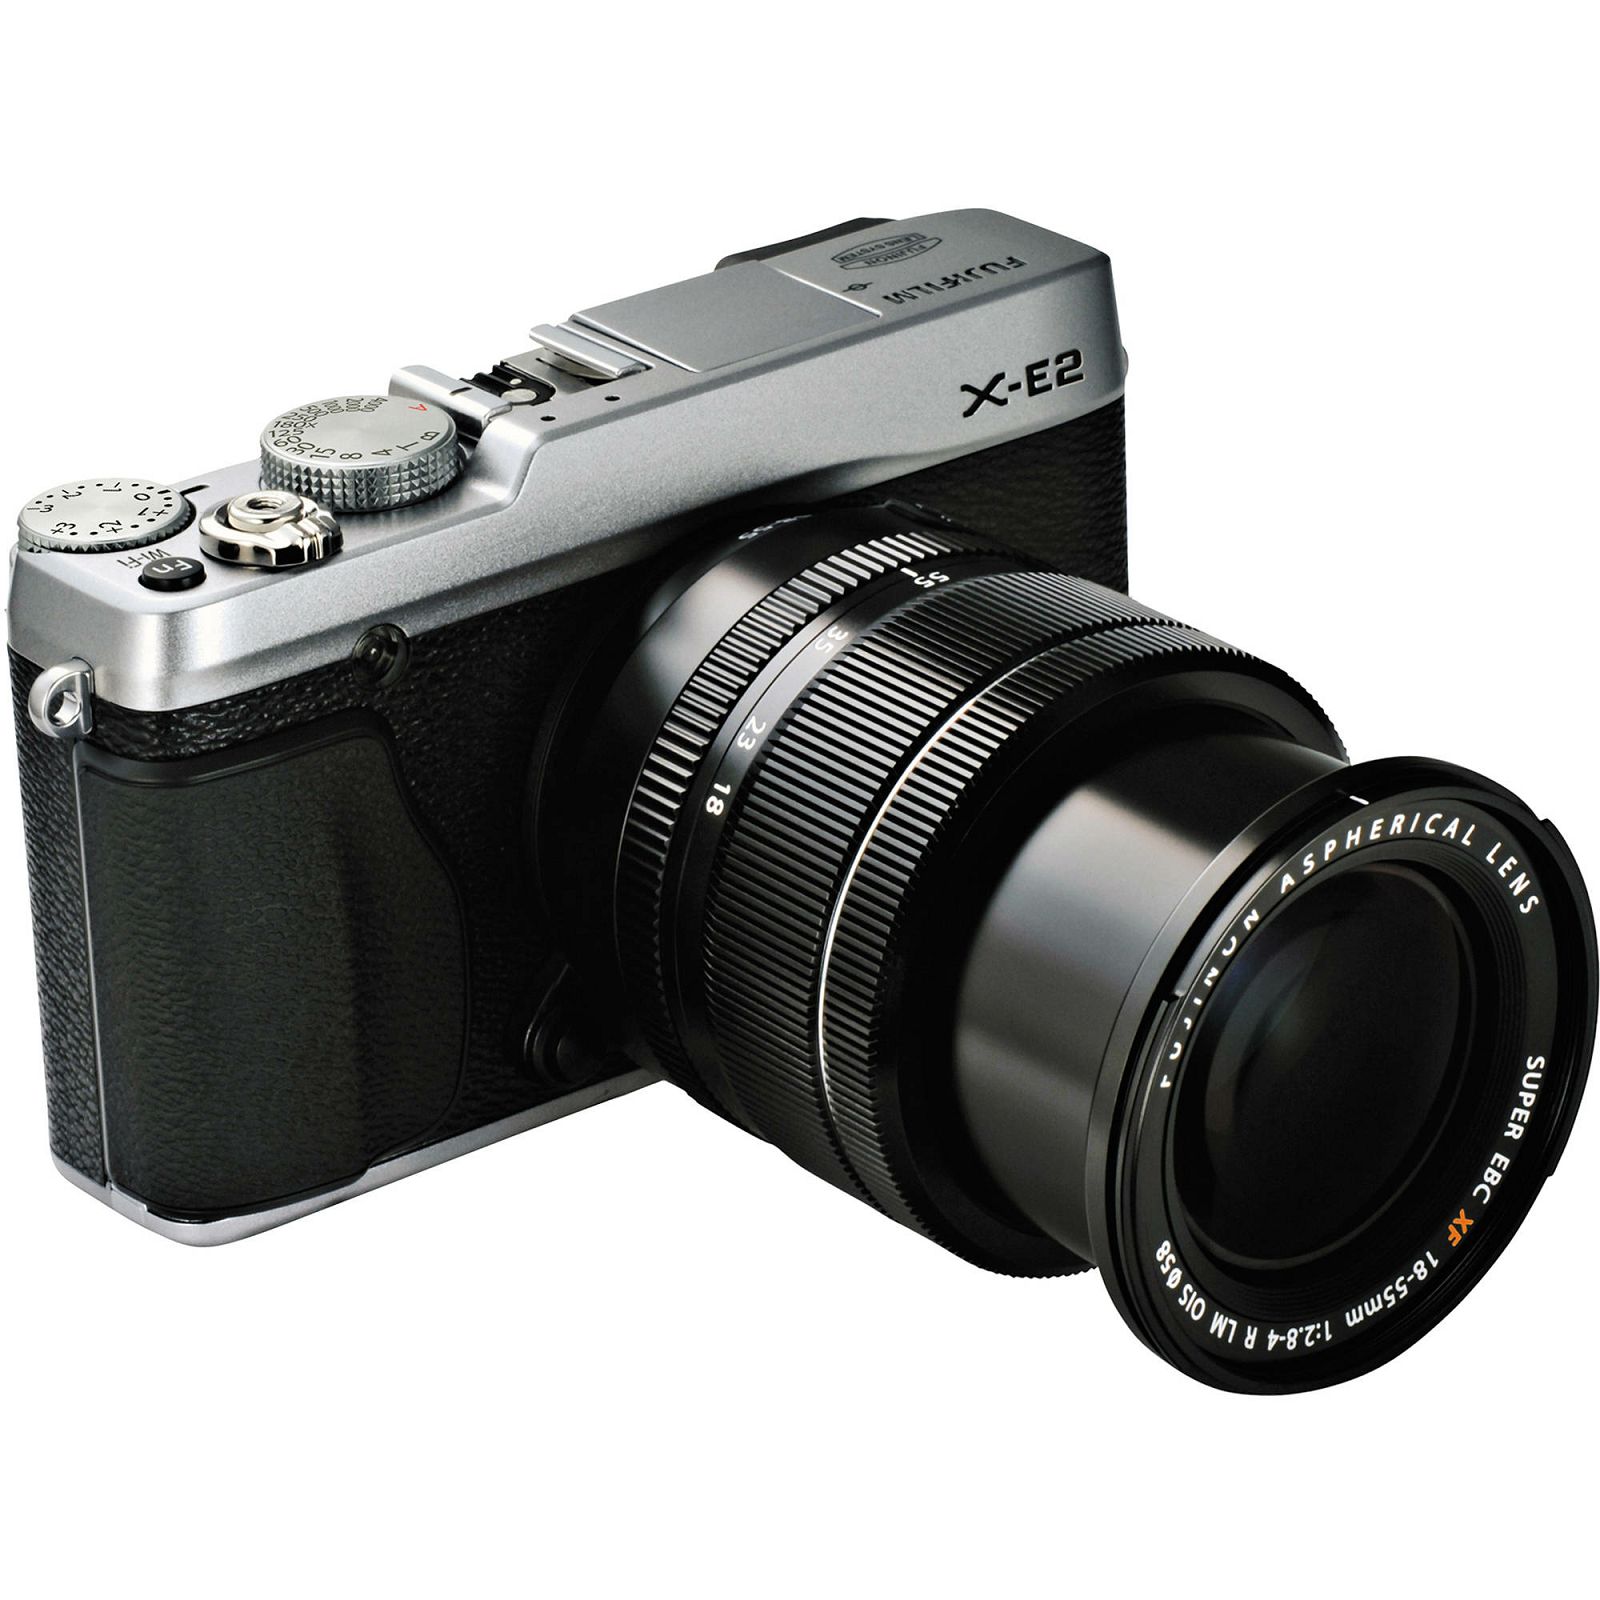 Fuji Finepix X-E2 + 18-55mm f2.8-4 OIS KIT srebreni Fujifilm fotoaparat Body + lens Fujinon 18-55 2.8-4 16MP APS- Trans CMOS II, 3,0" LCD, 1,040K + OVF